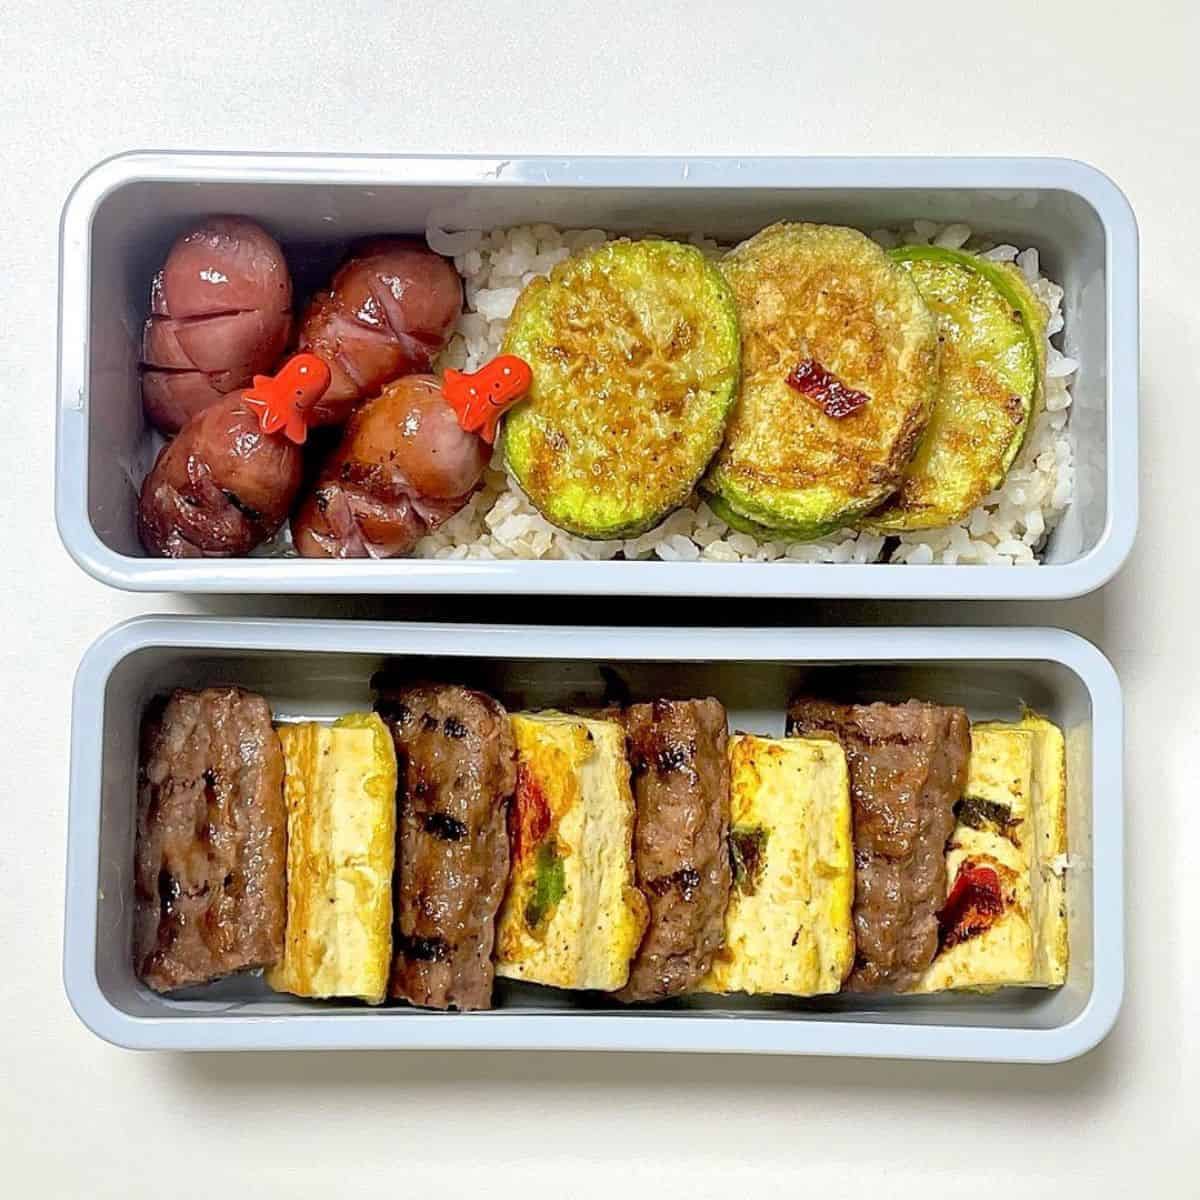 https://www.honestfoodtalks.com/wp-content/uploads/2023/05/Rectangular-lunch-boxes-with-food.jpg